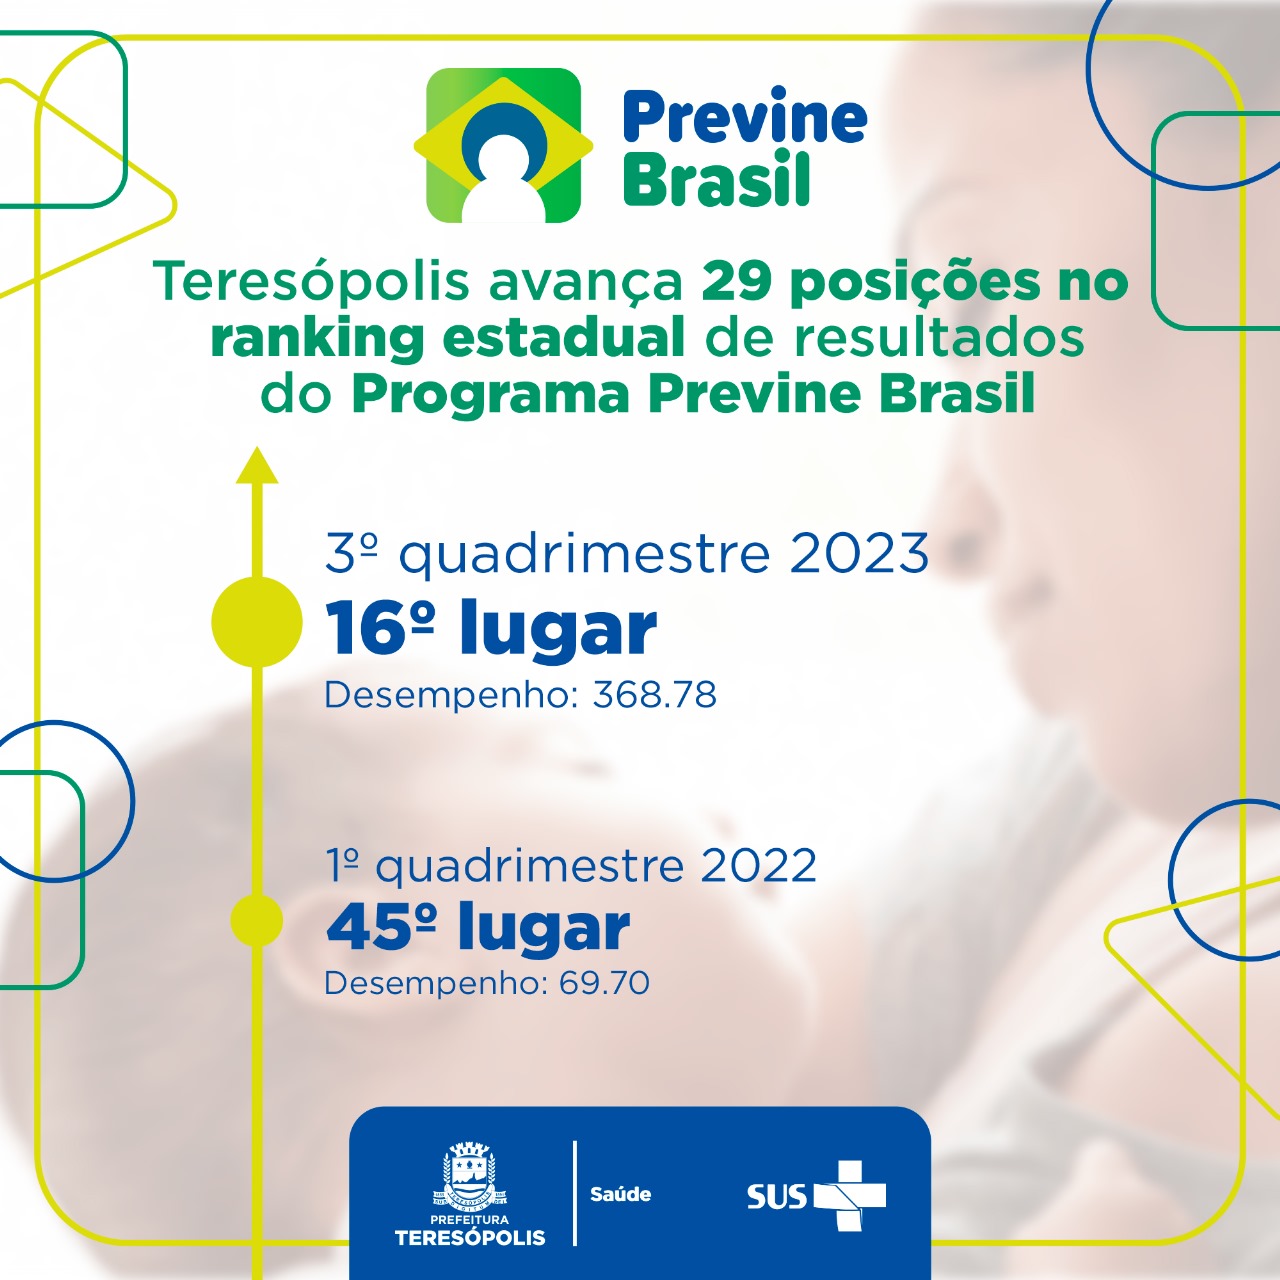 Previne Brasil: Teresópolis avança 29 posições no ranking estadual de resultados do programa.